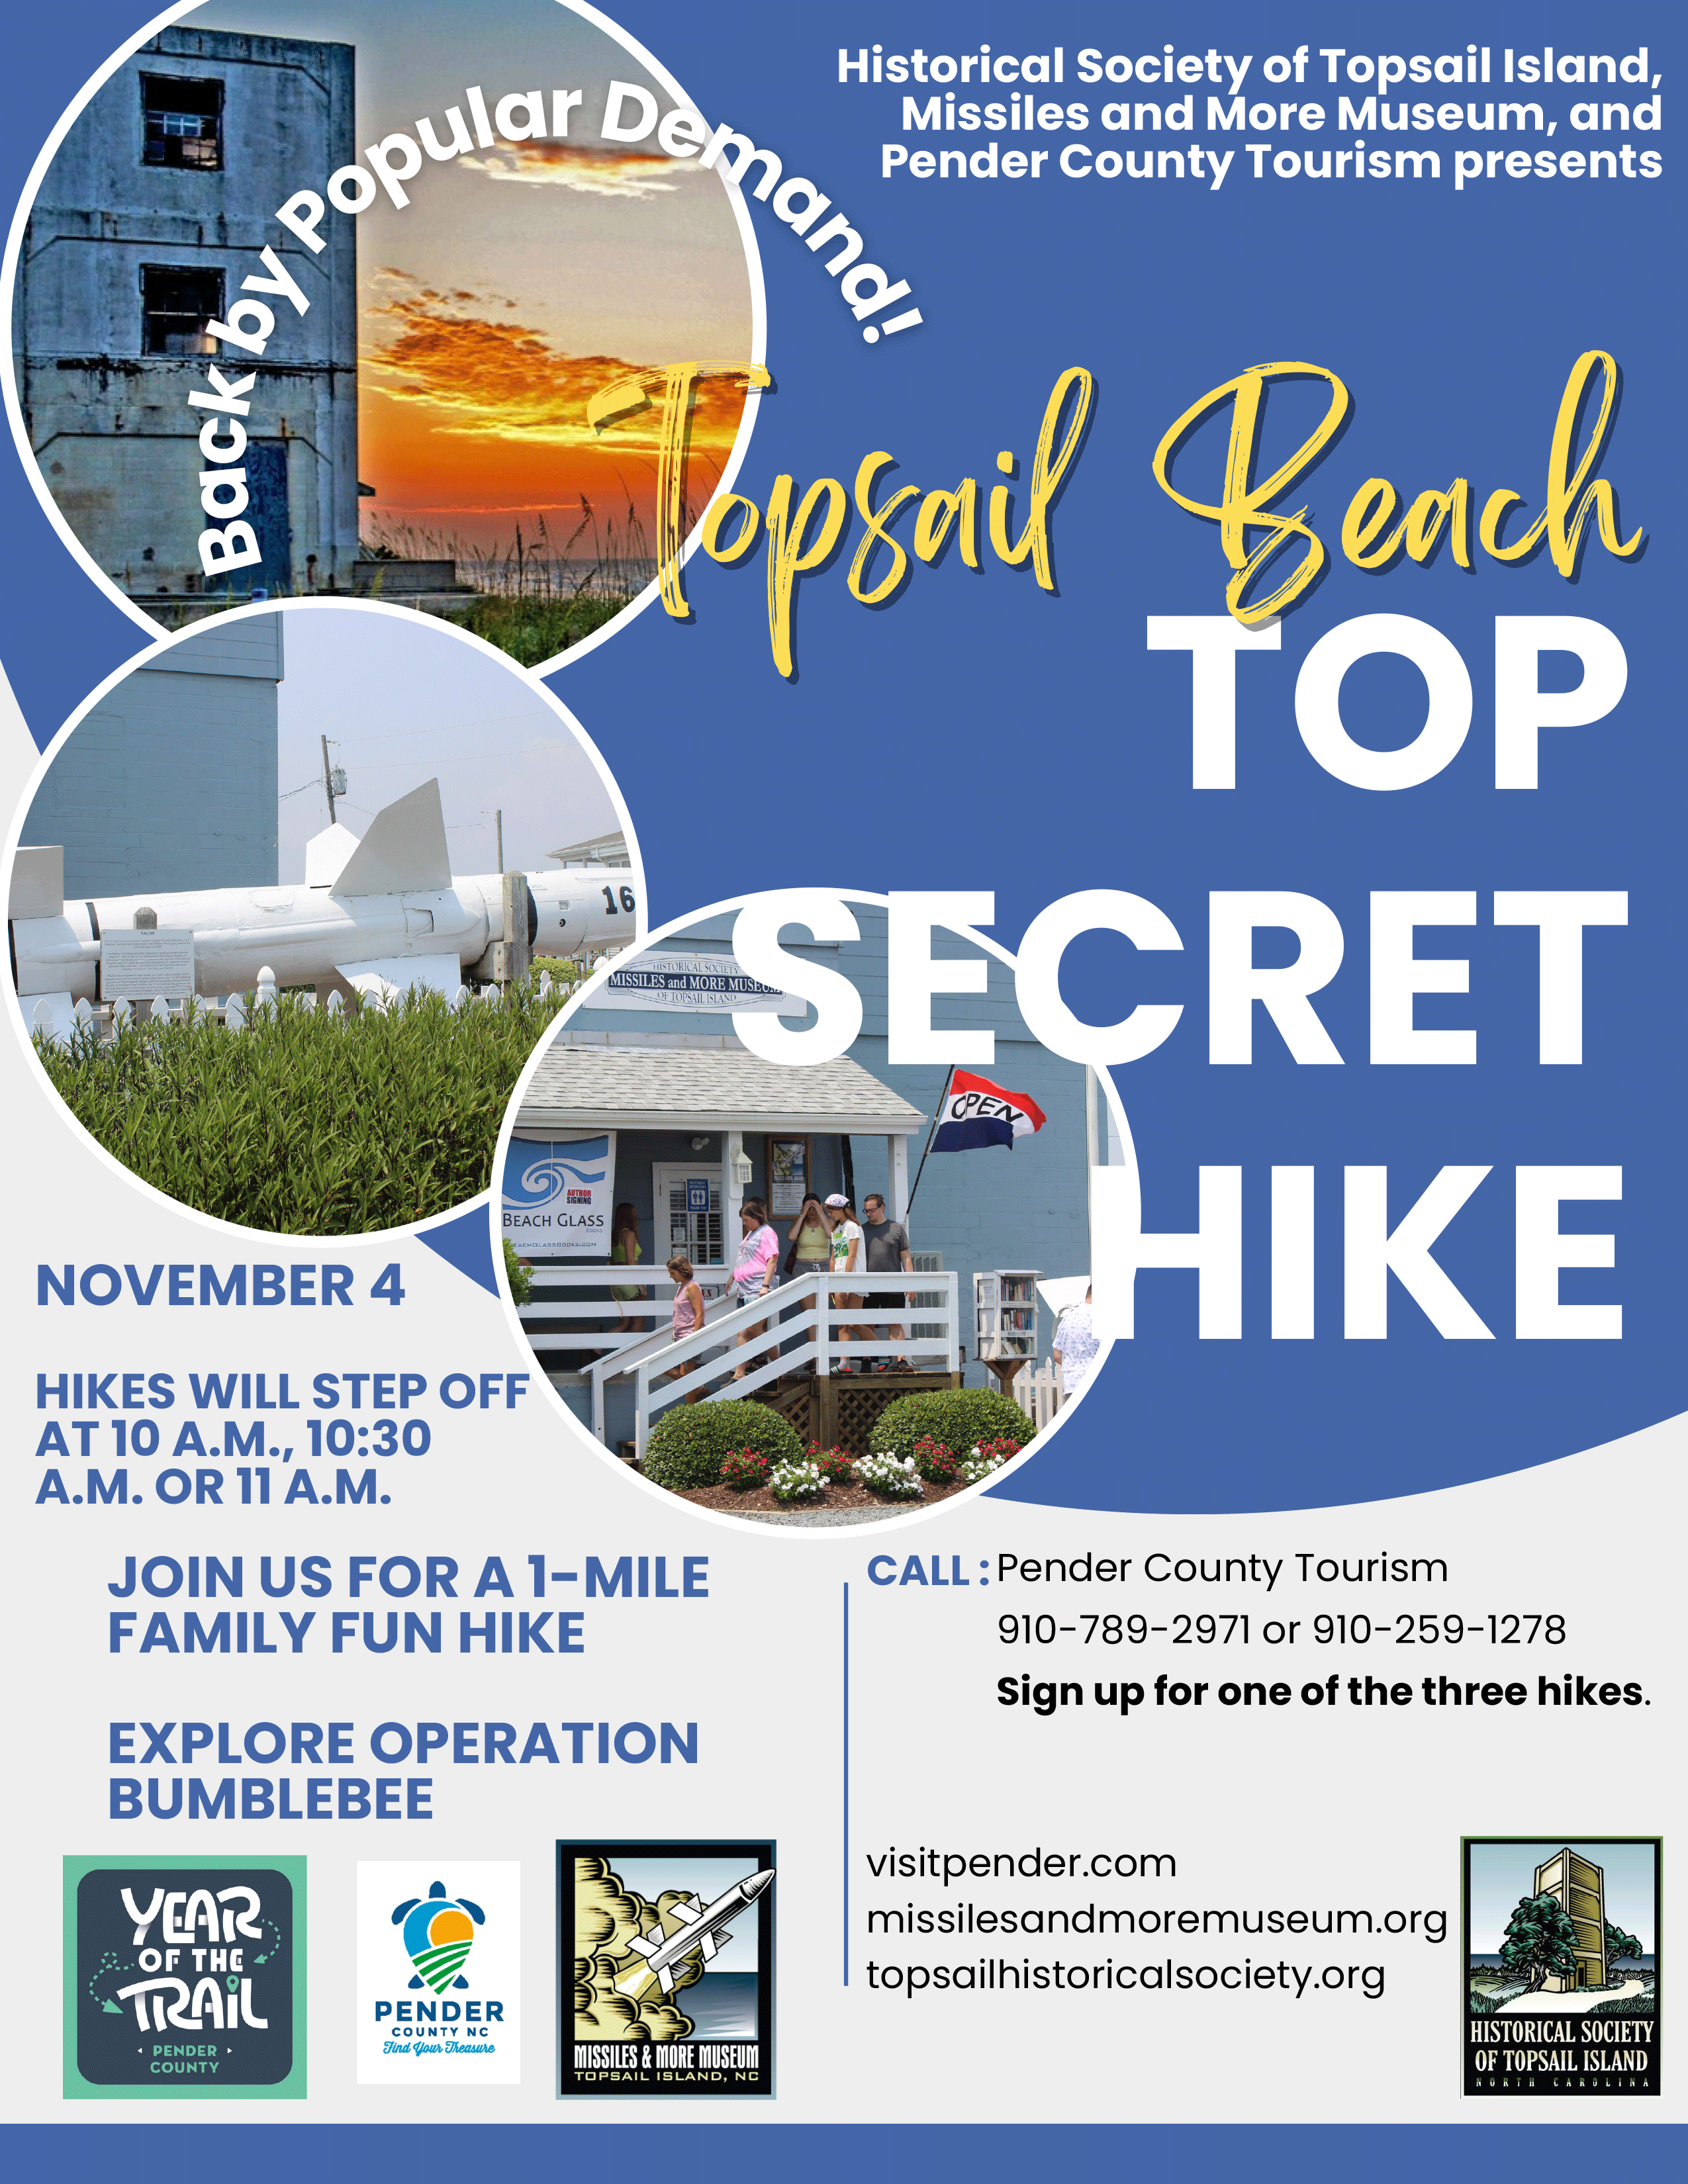 Topsail Beach | Top Secret Hike | Historical Society of Topsail Island